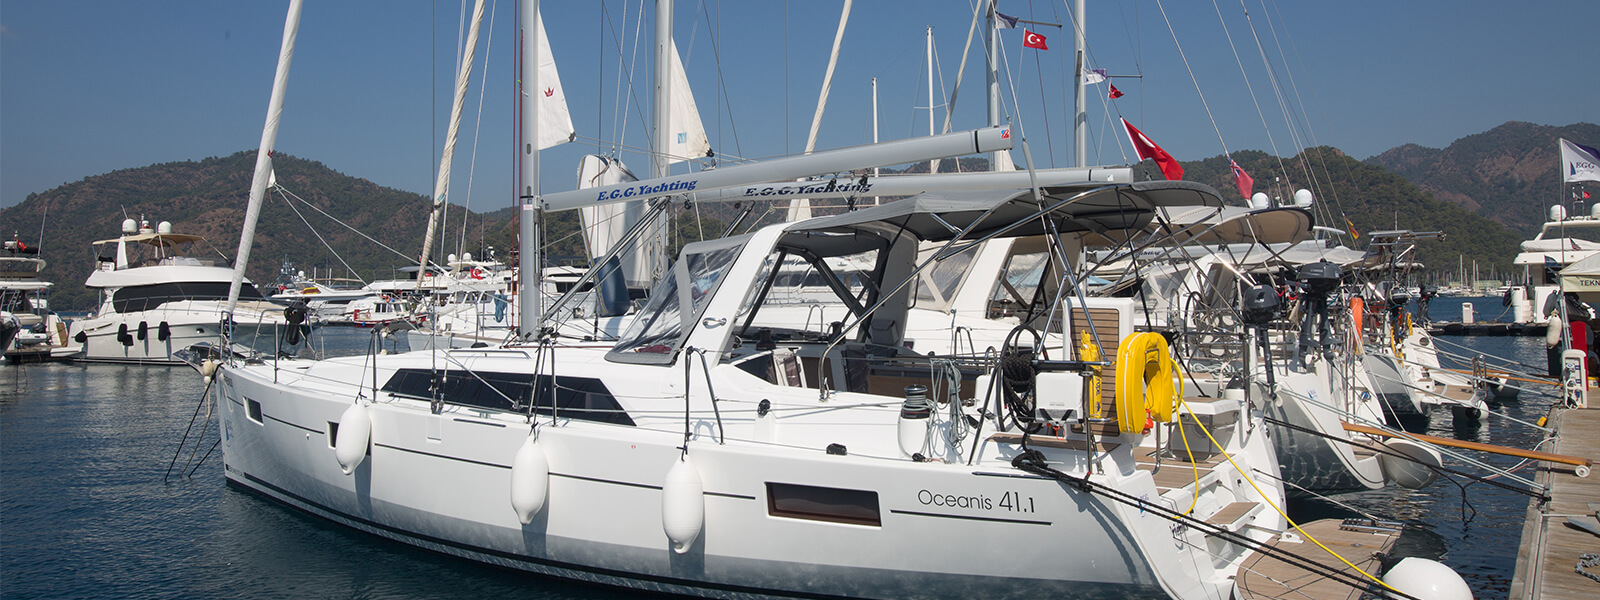 oceanis-41.1-türkei-goecek-marina-sailvation-yachting-01